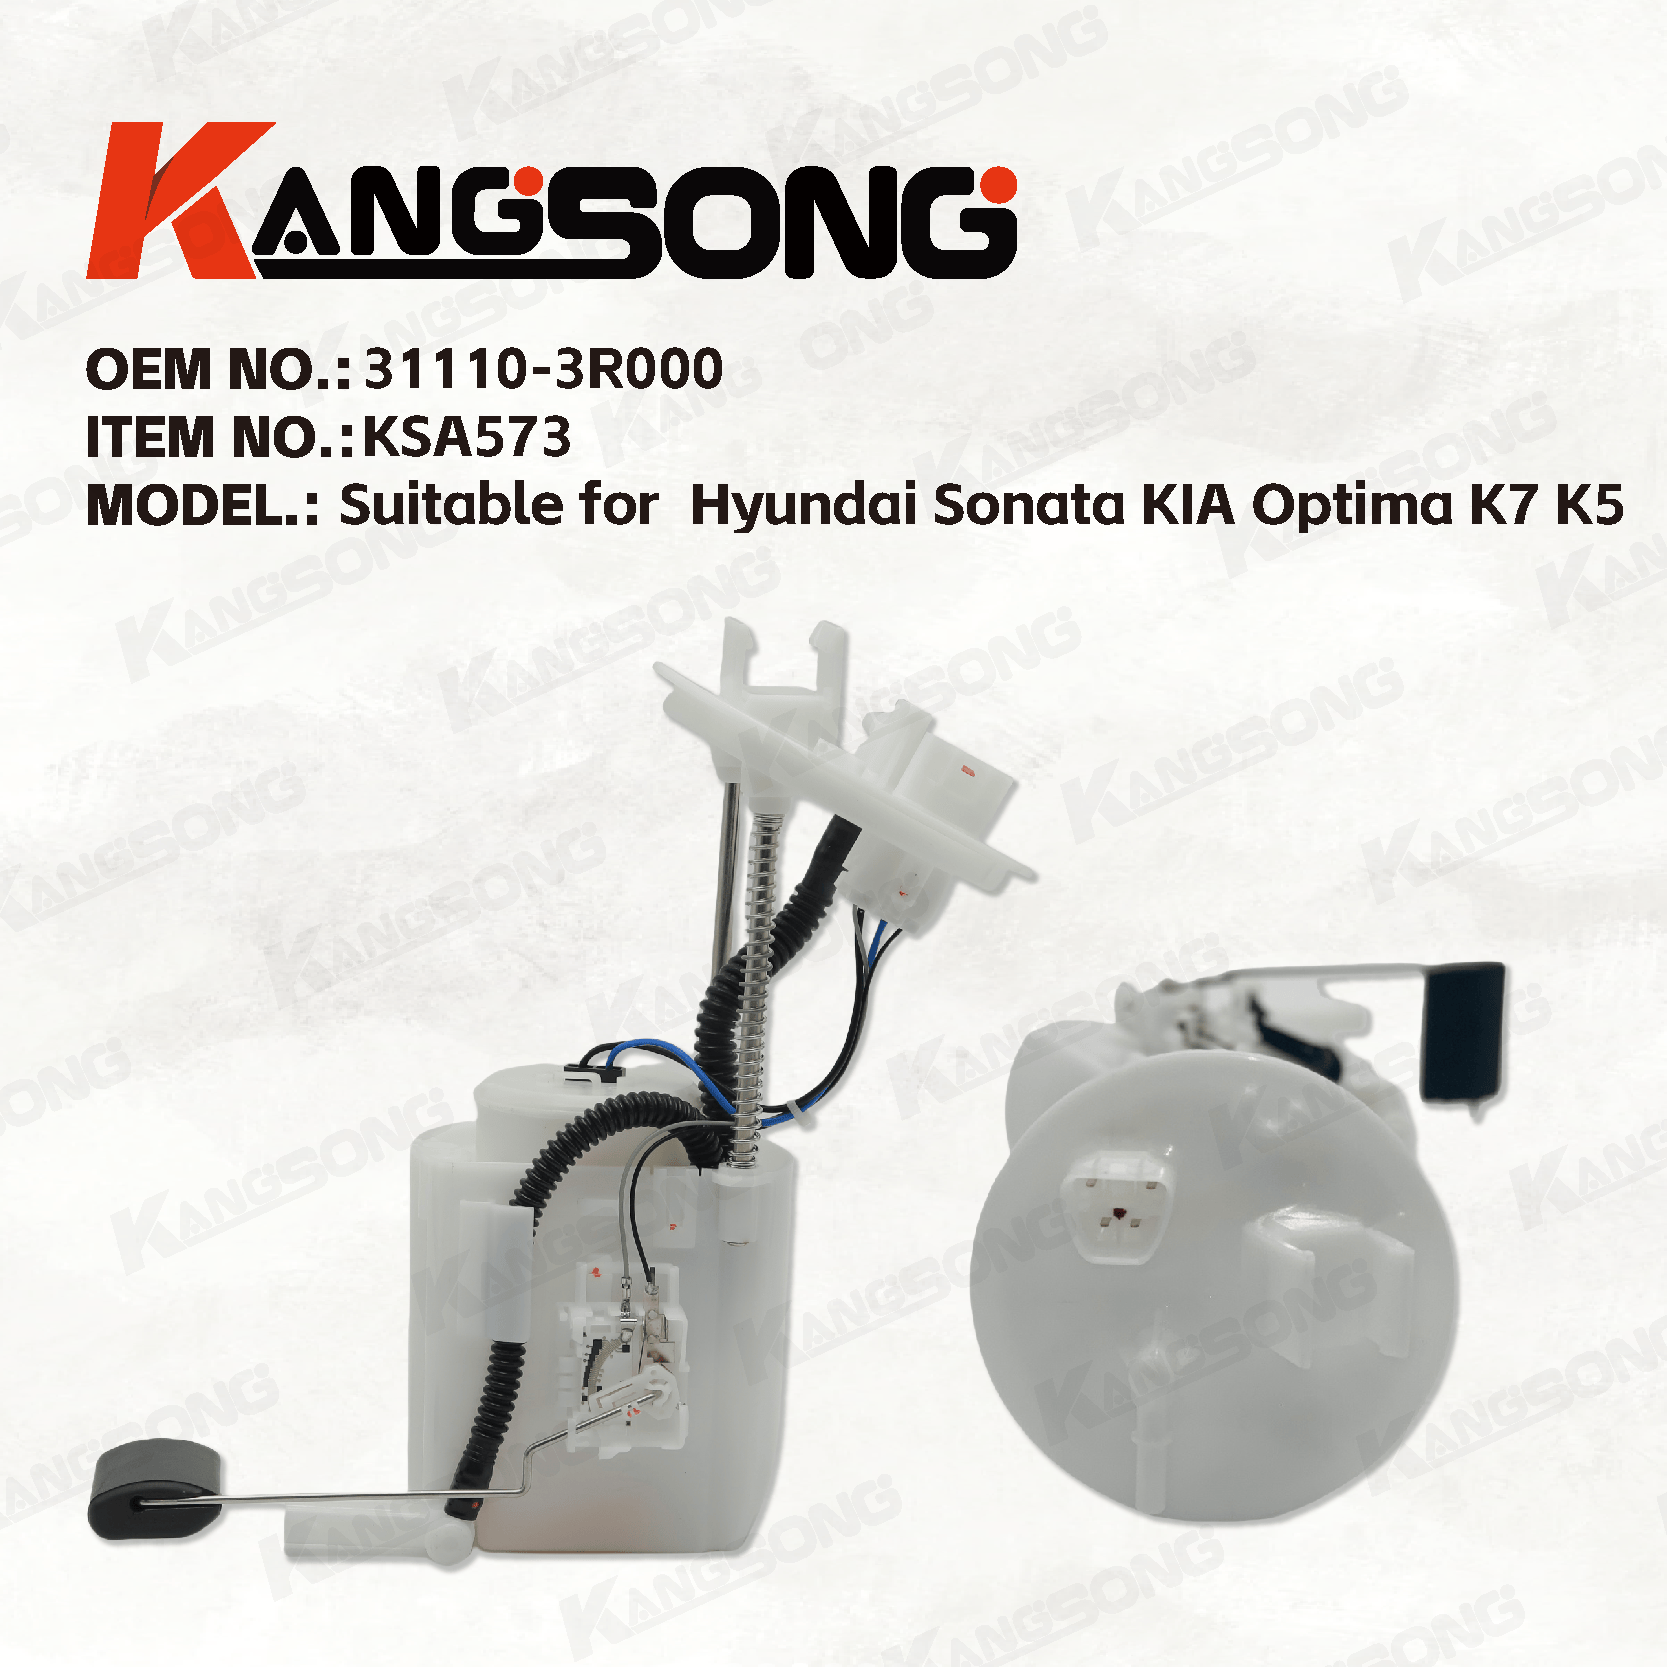 Applicable to Hyundai Sonata KIA Optima K7 K5 /31110-3R000/Fuel Pump Assembly/KS-A573